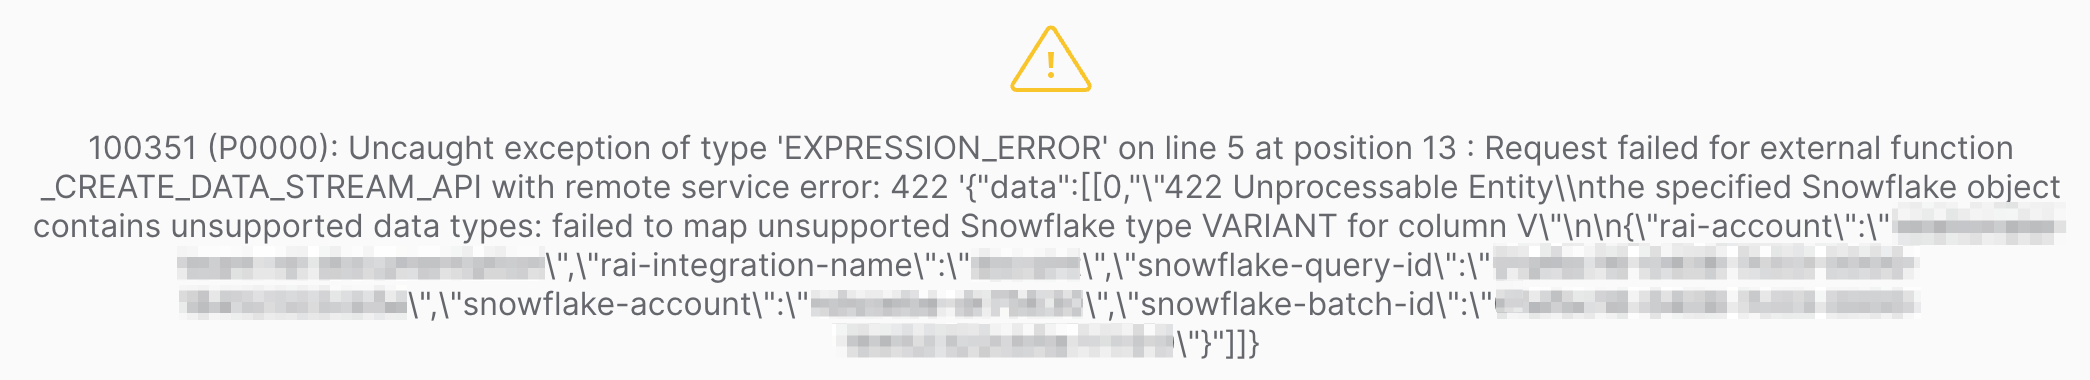 Error example from Snowflake